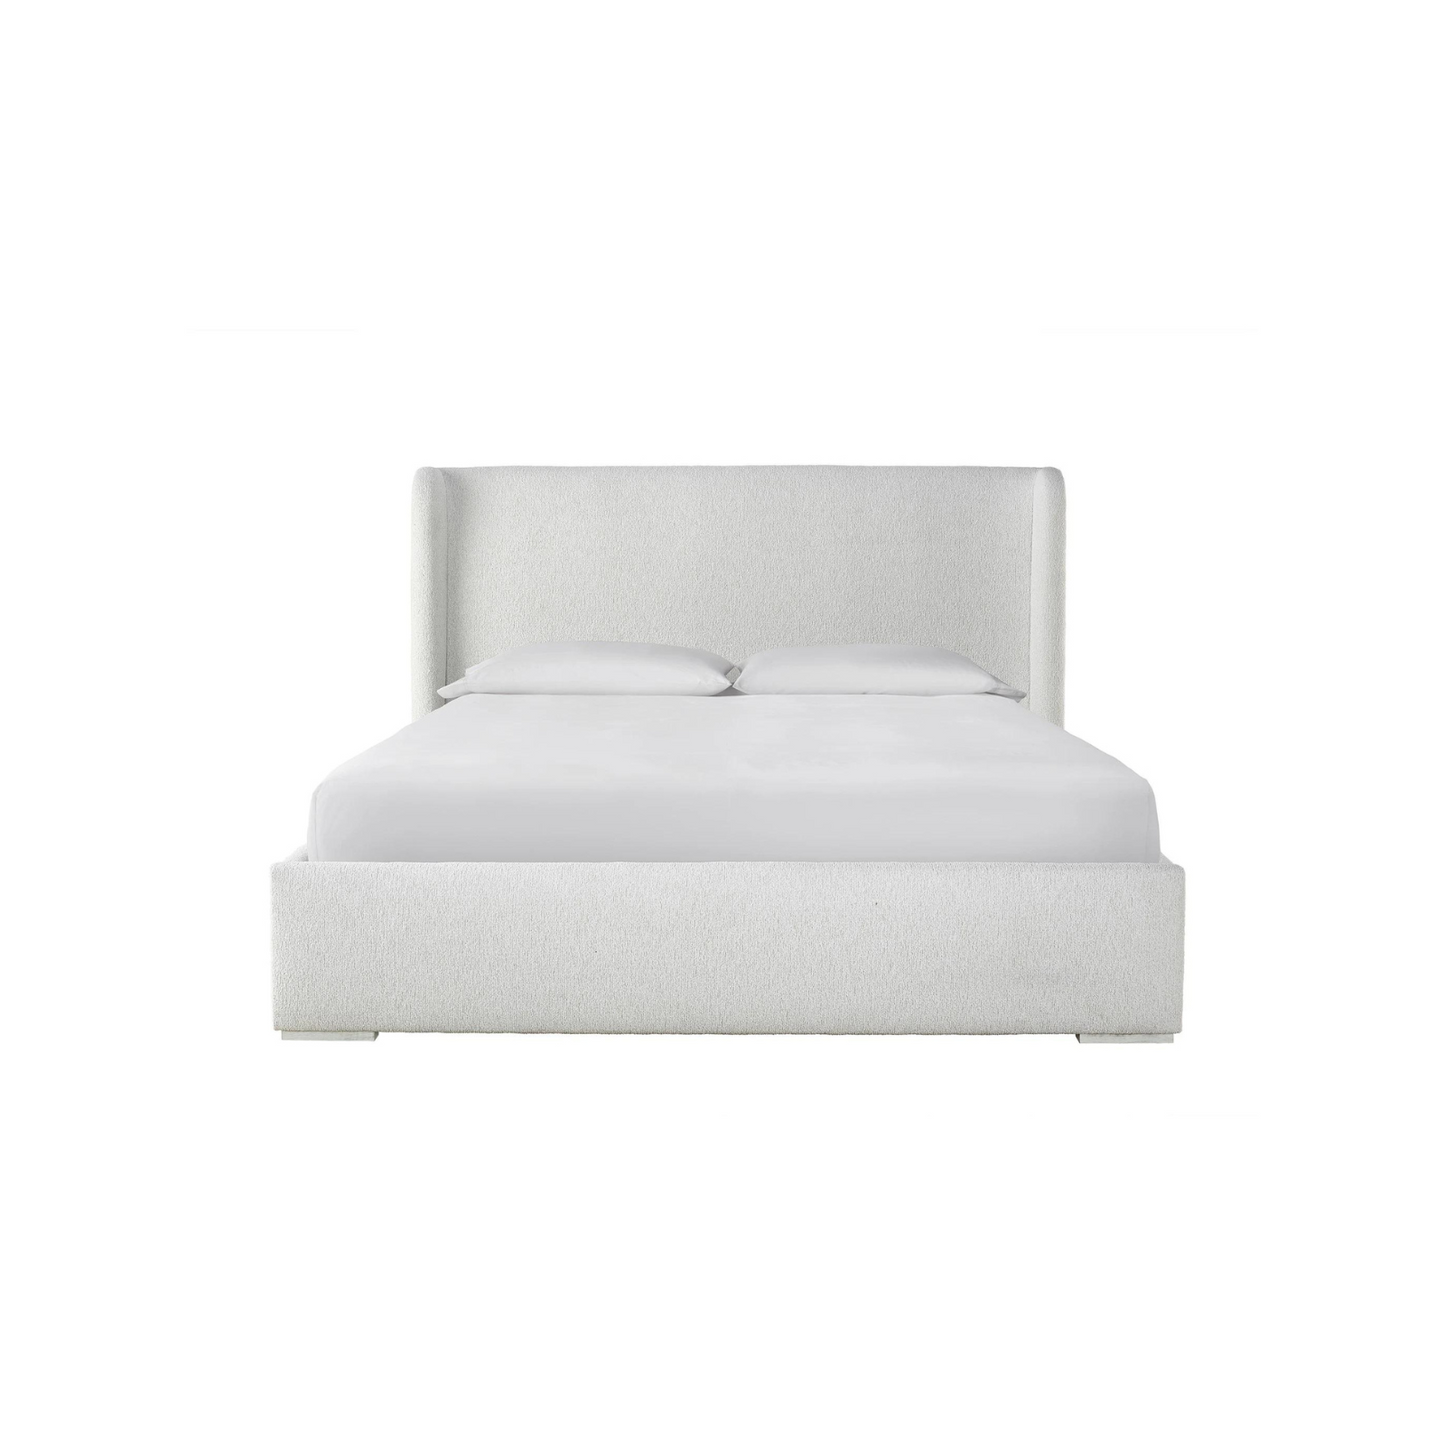 Restore Upholstered Bed